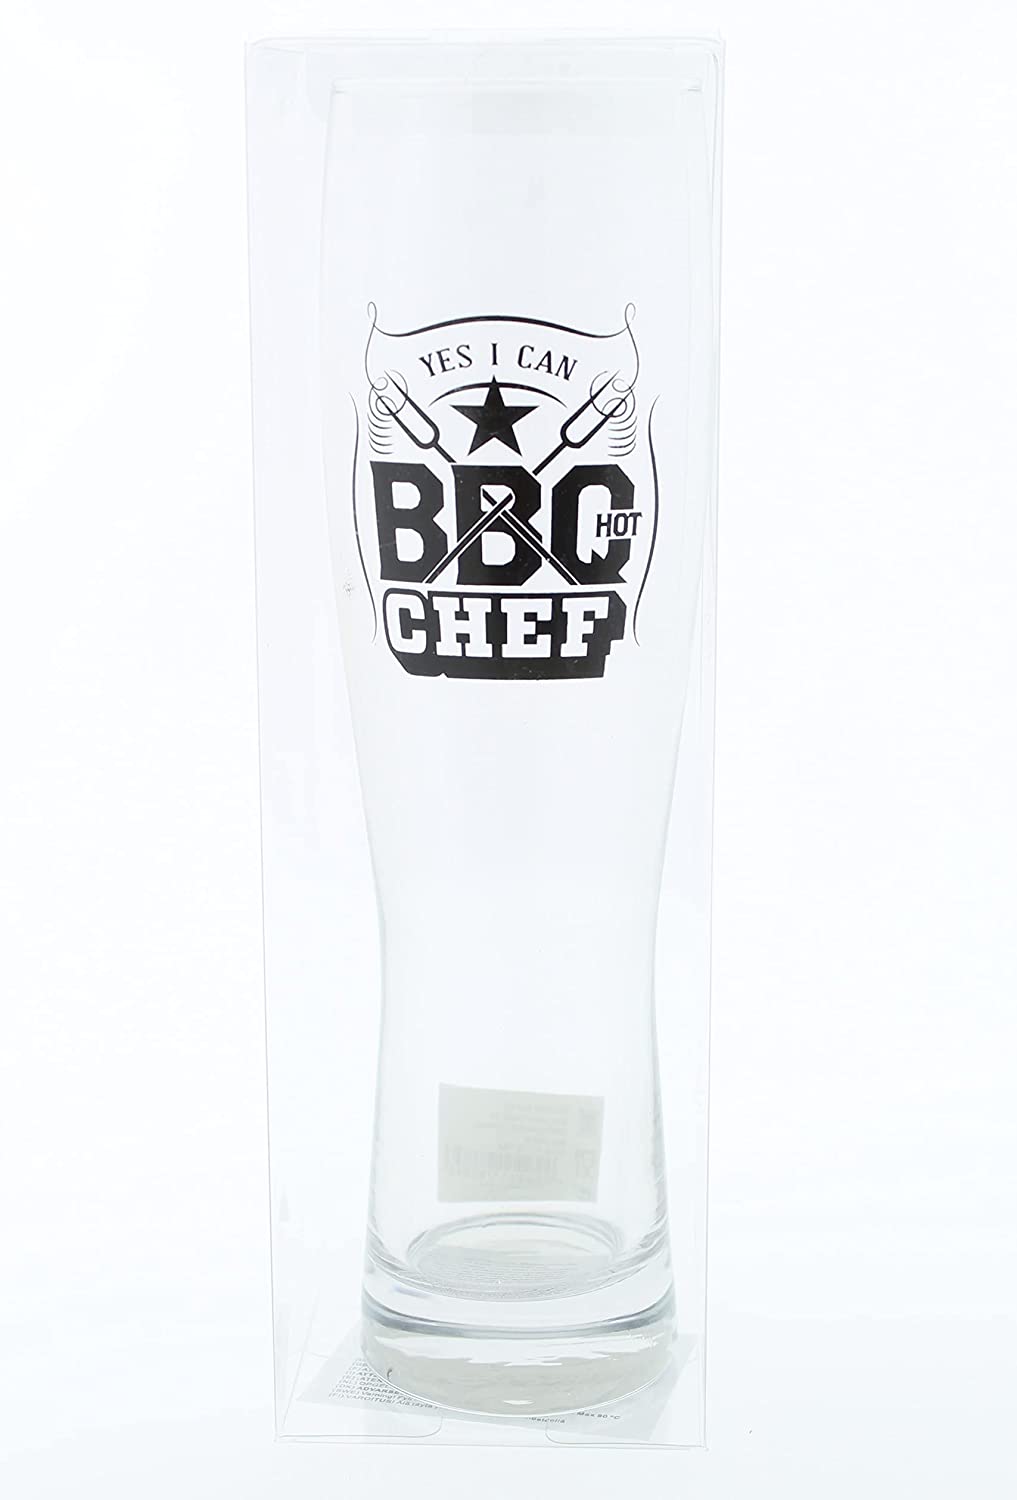 Bierglas BBC Chef - Yes i can - Abmessung ca.26 x 7 x 7 cm